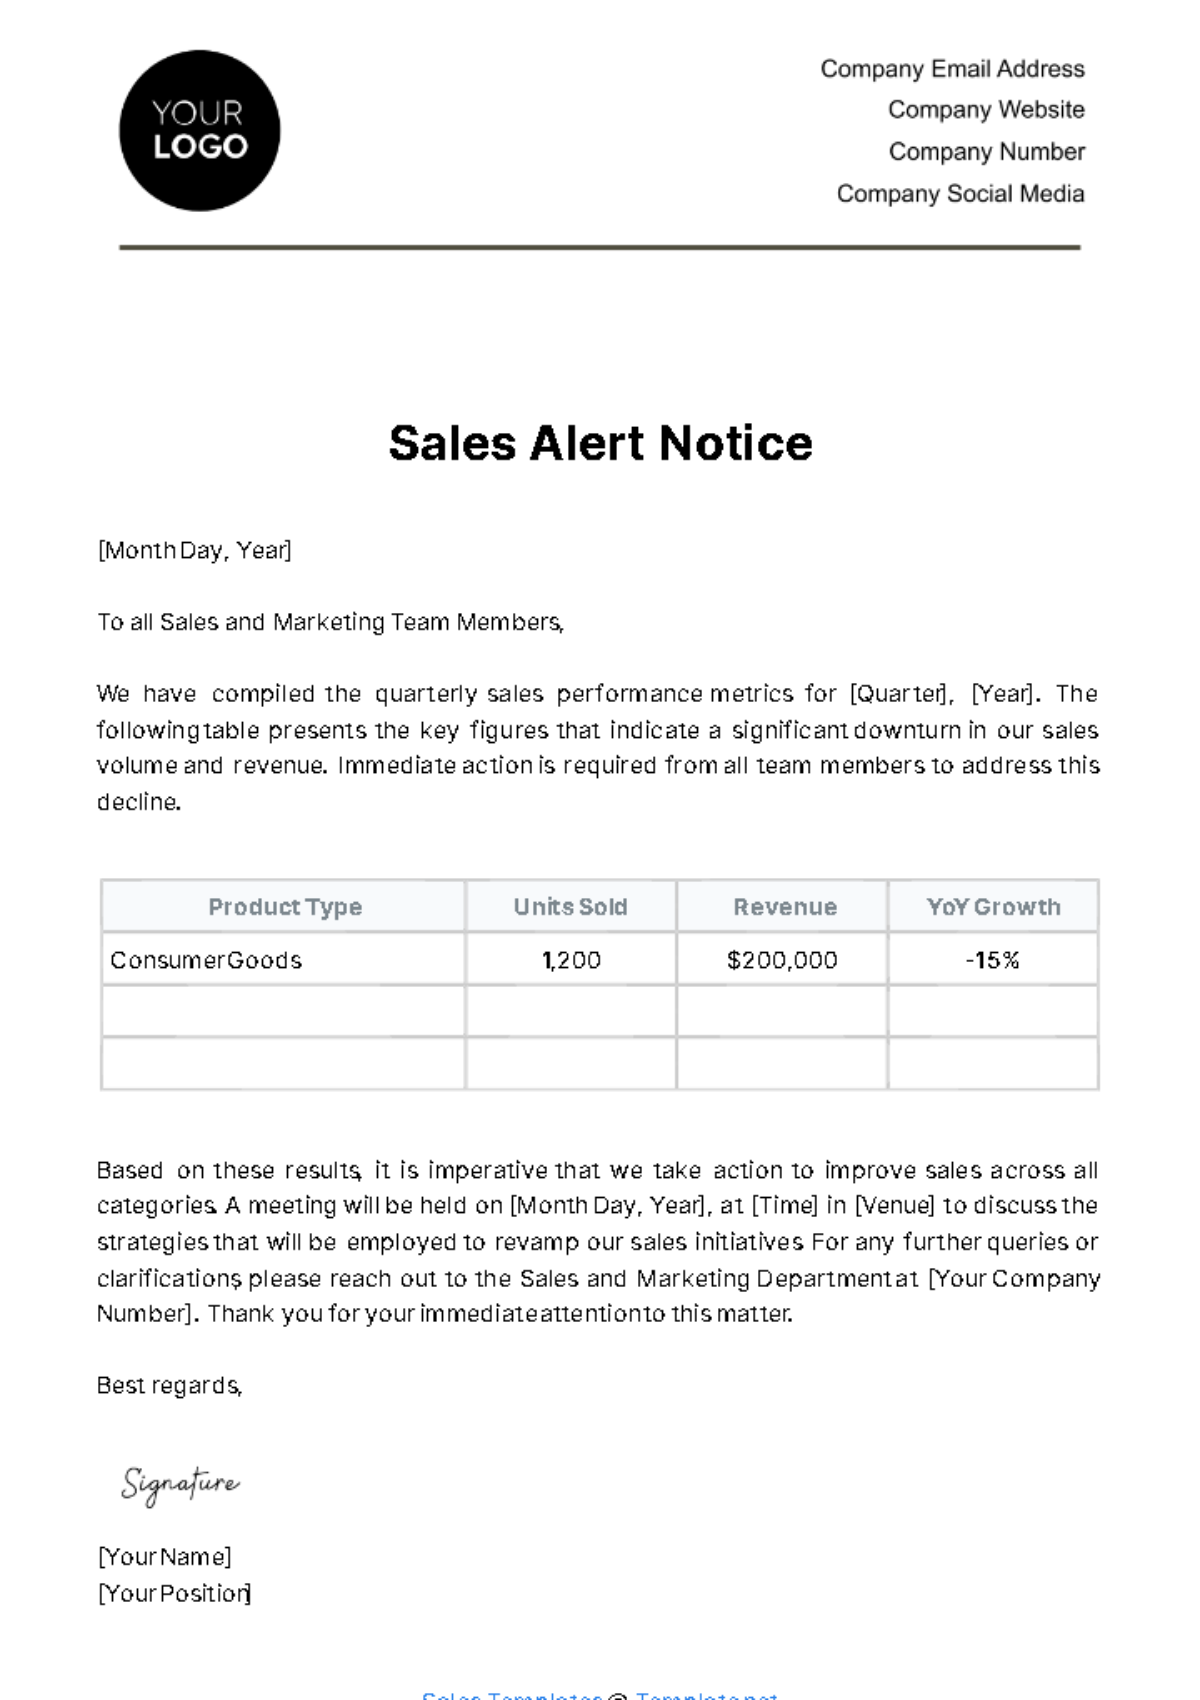 Sales Alert Notice Template